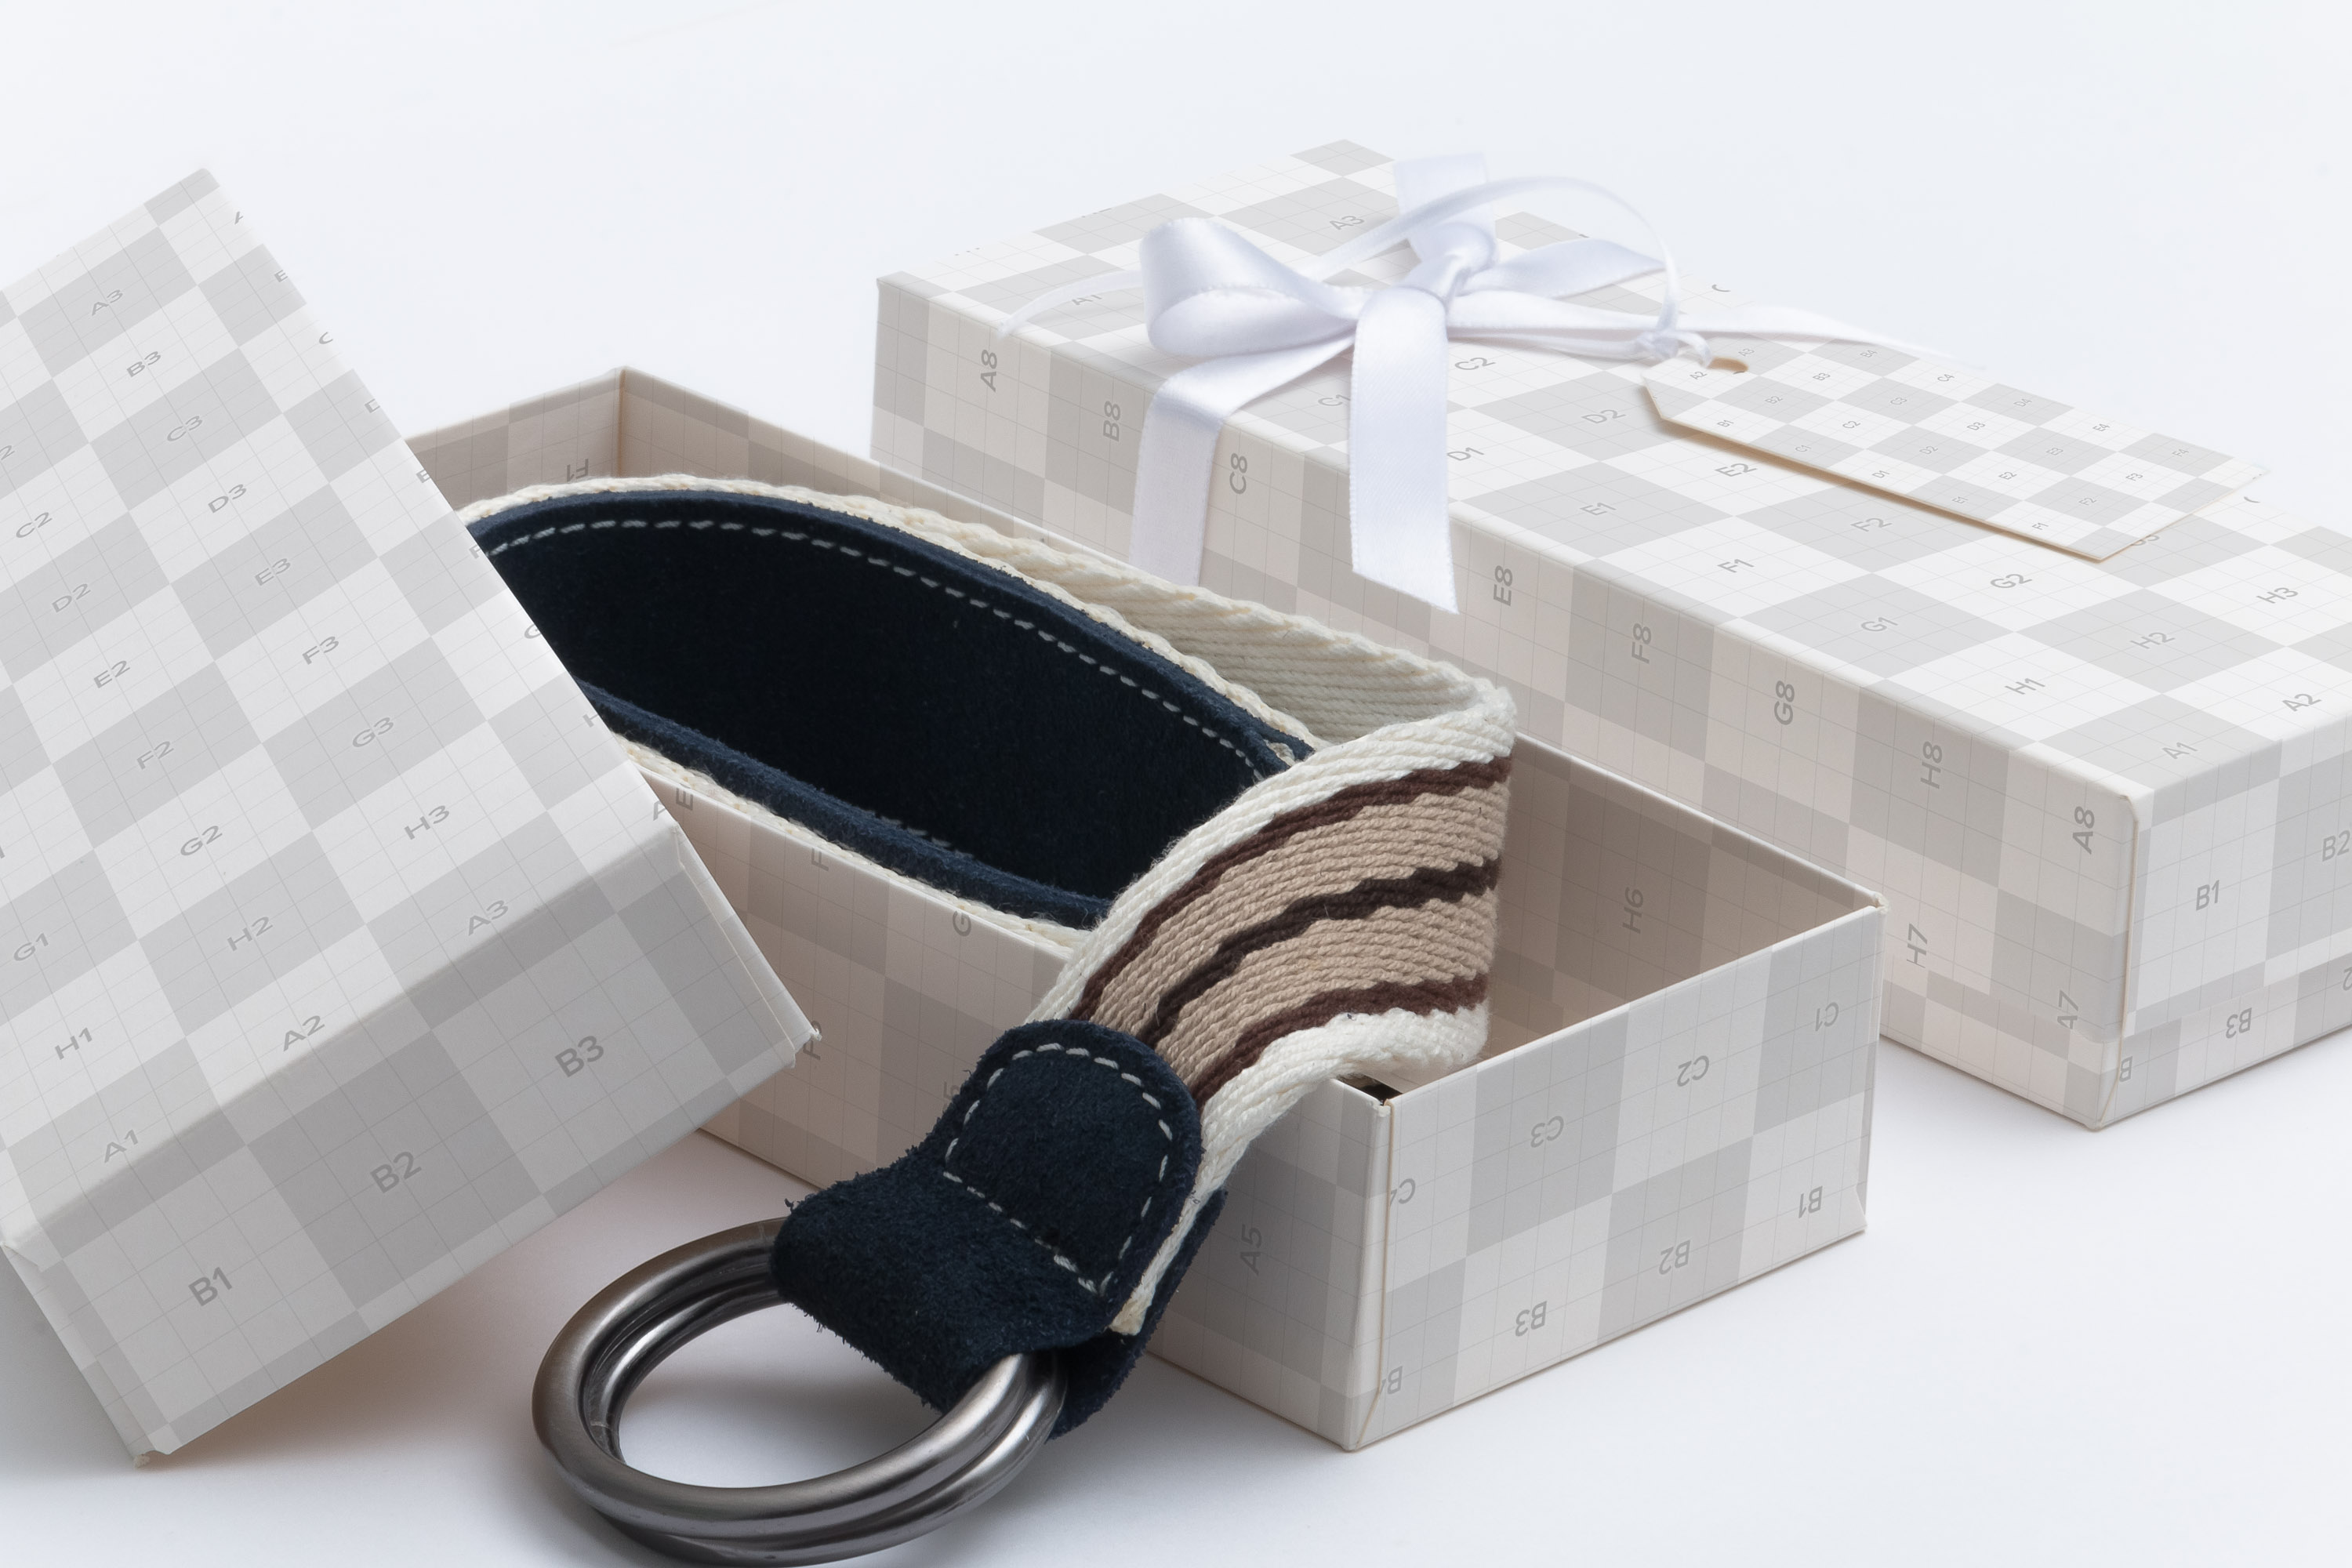 矩形精品礼品盒外观设计效果图样机02 Rectangular Gift Box Mockup 02插图(2)